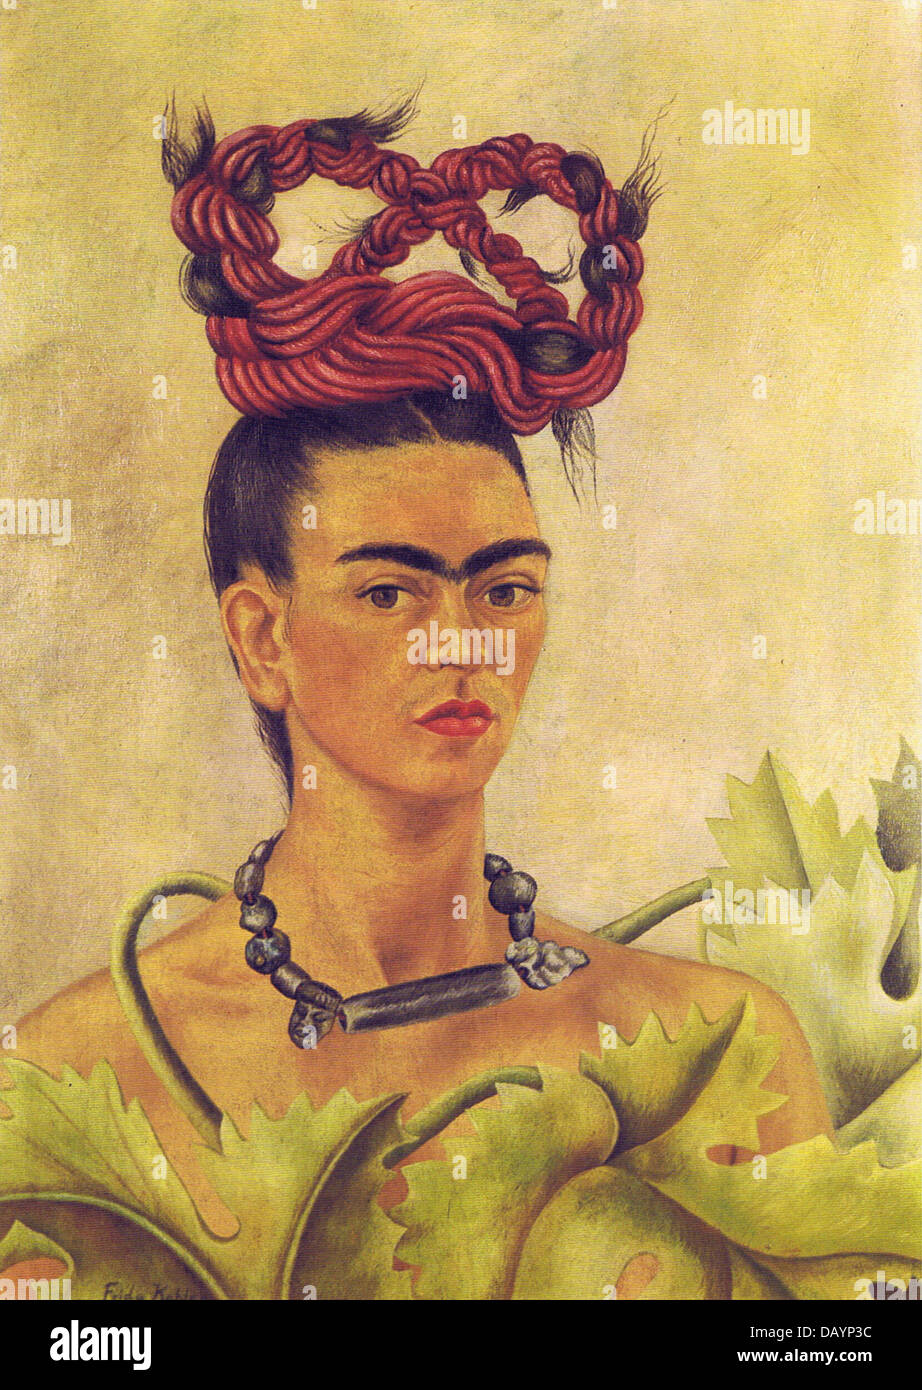 Frida Kahlo Self-portrait with braid 1941 Stock Photo